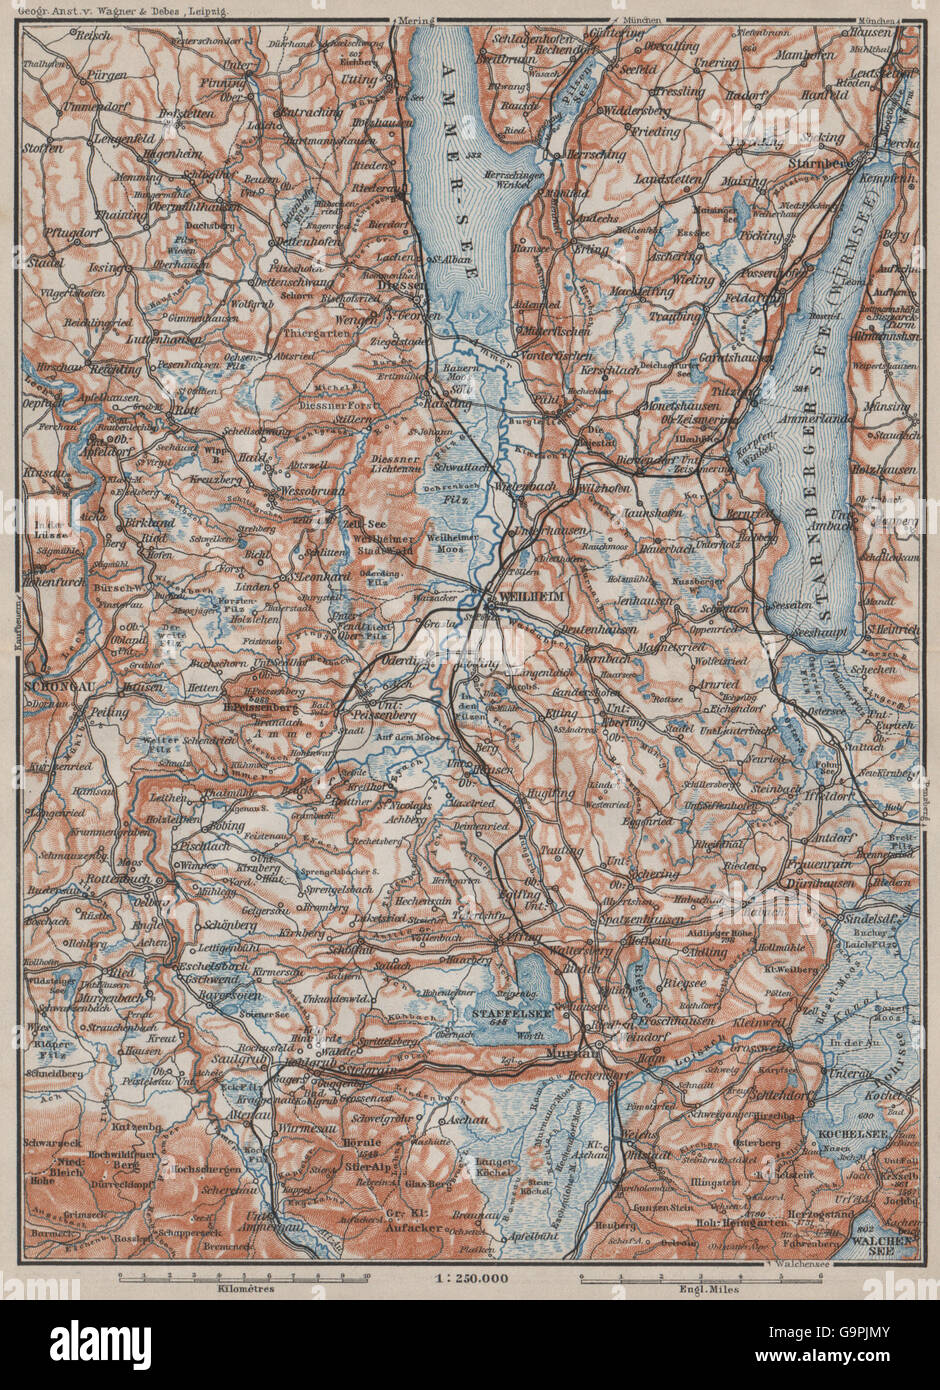 STARNBERGERSEE & AMMERSEE. Weilheim Schongau Murnau Starnberg karte, 1902 map Stock Photo